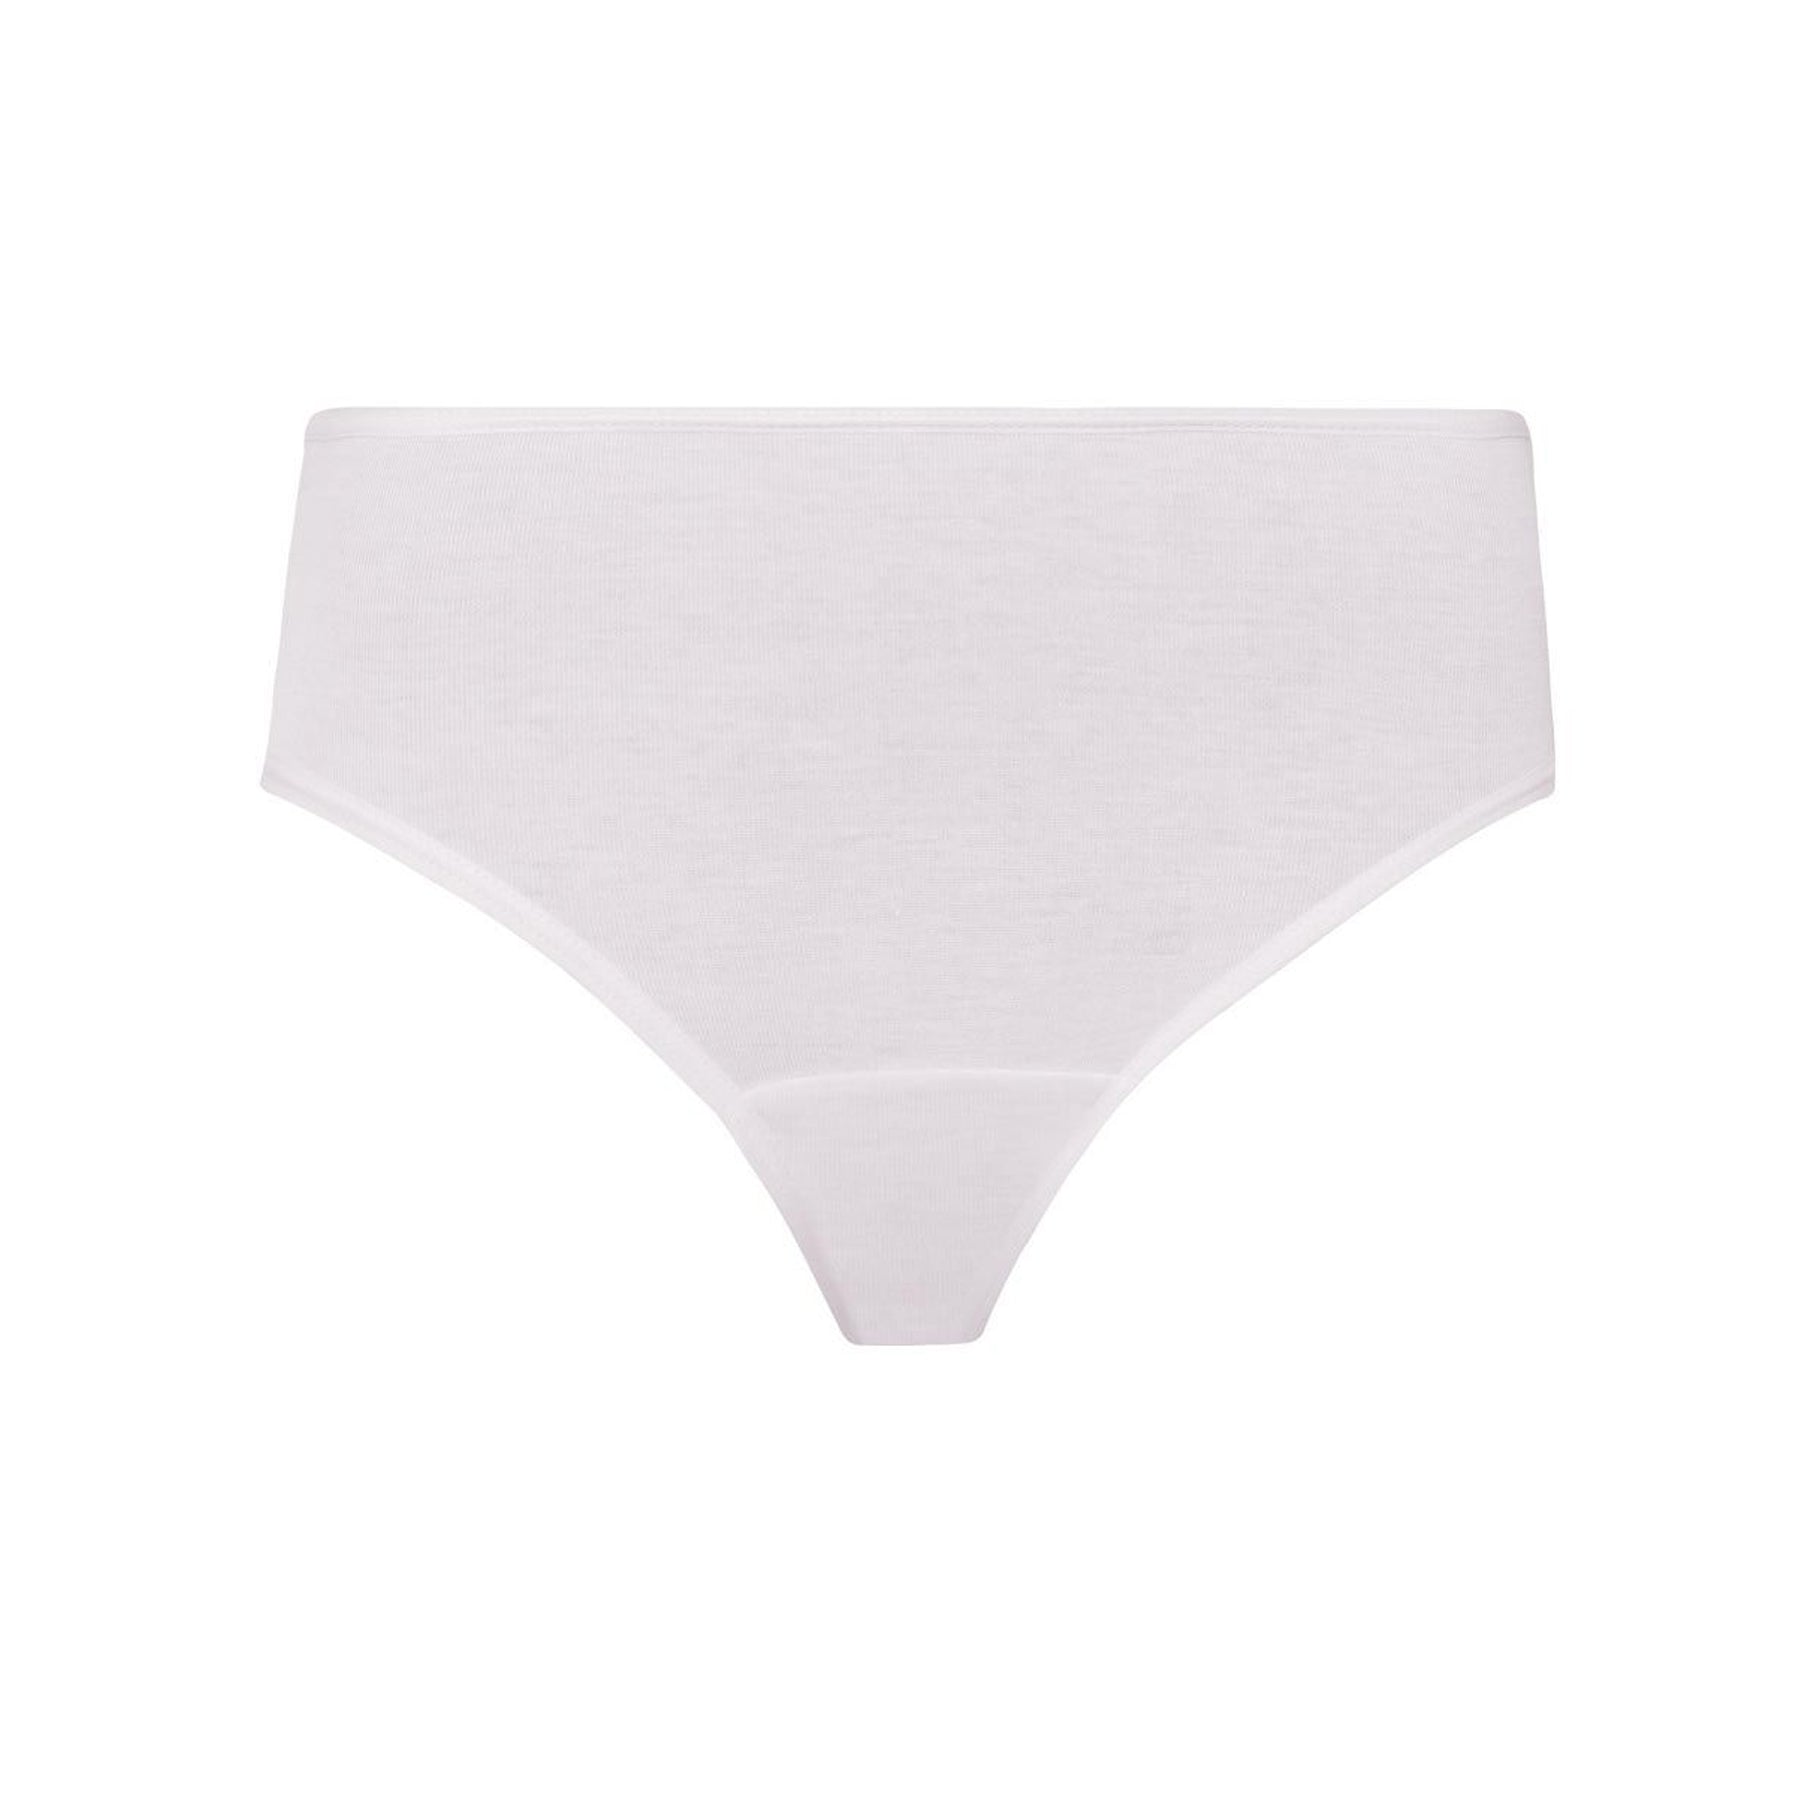 Buy Hanro Women's Cotton Seamless Boyleg Panty, White, X-Small at